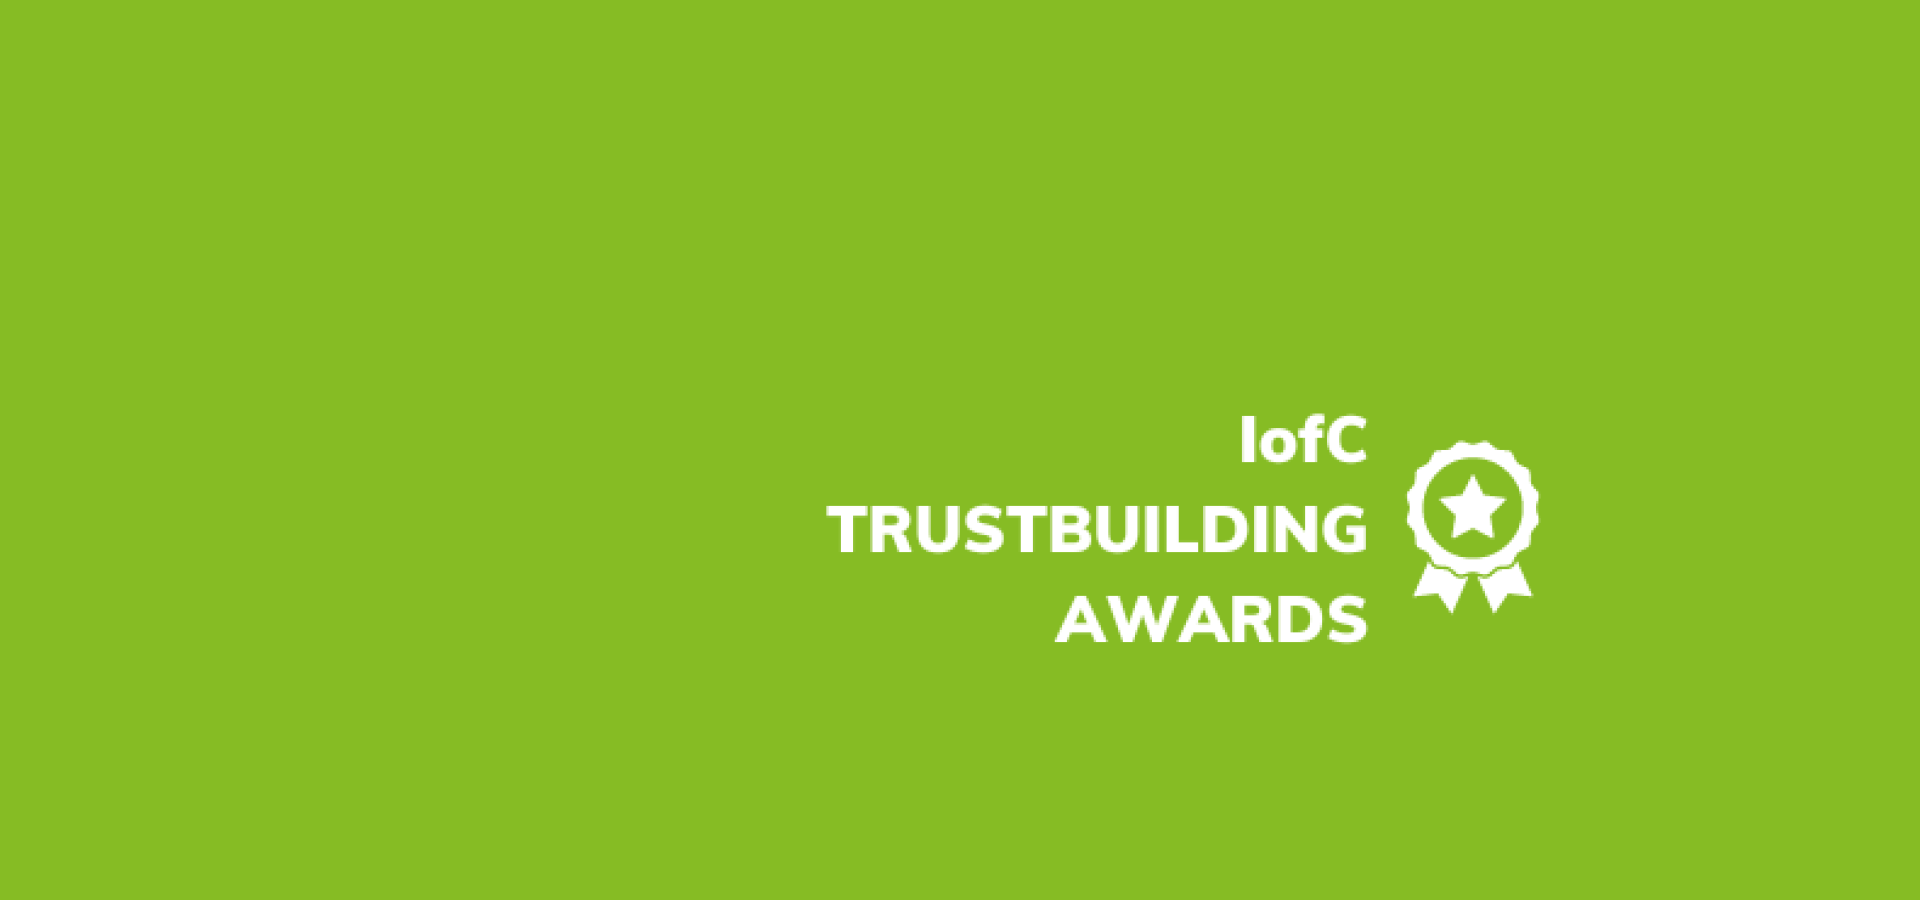 IofC TB Award_Mobile Image_Announcement